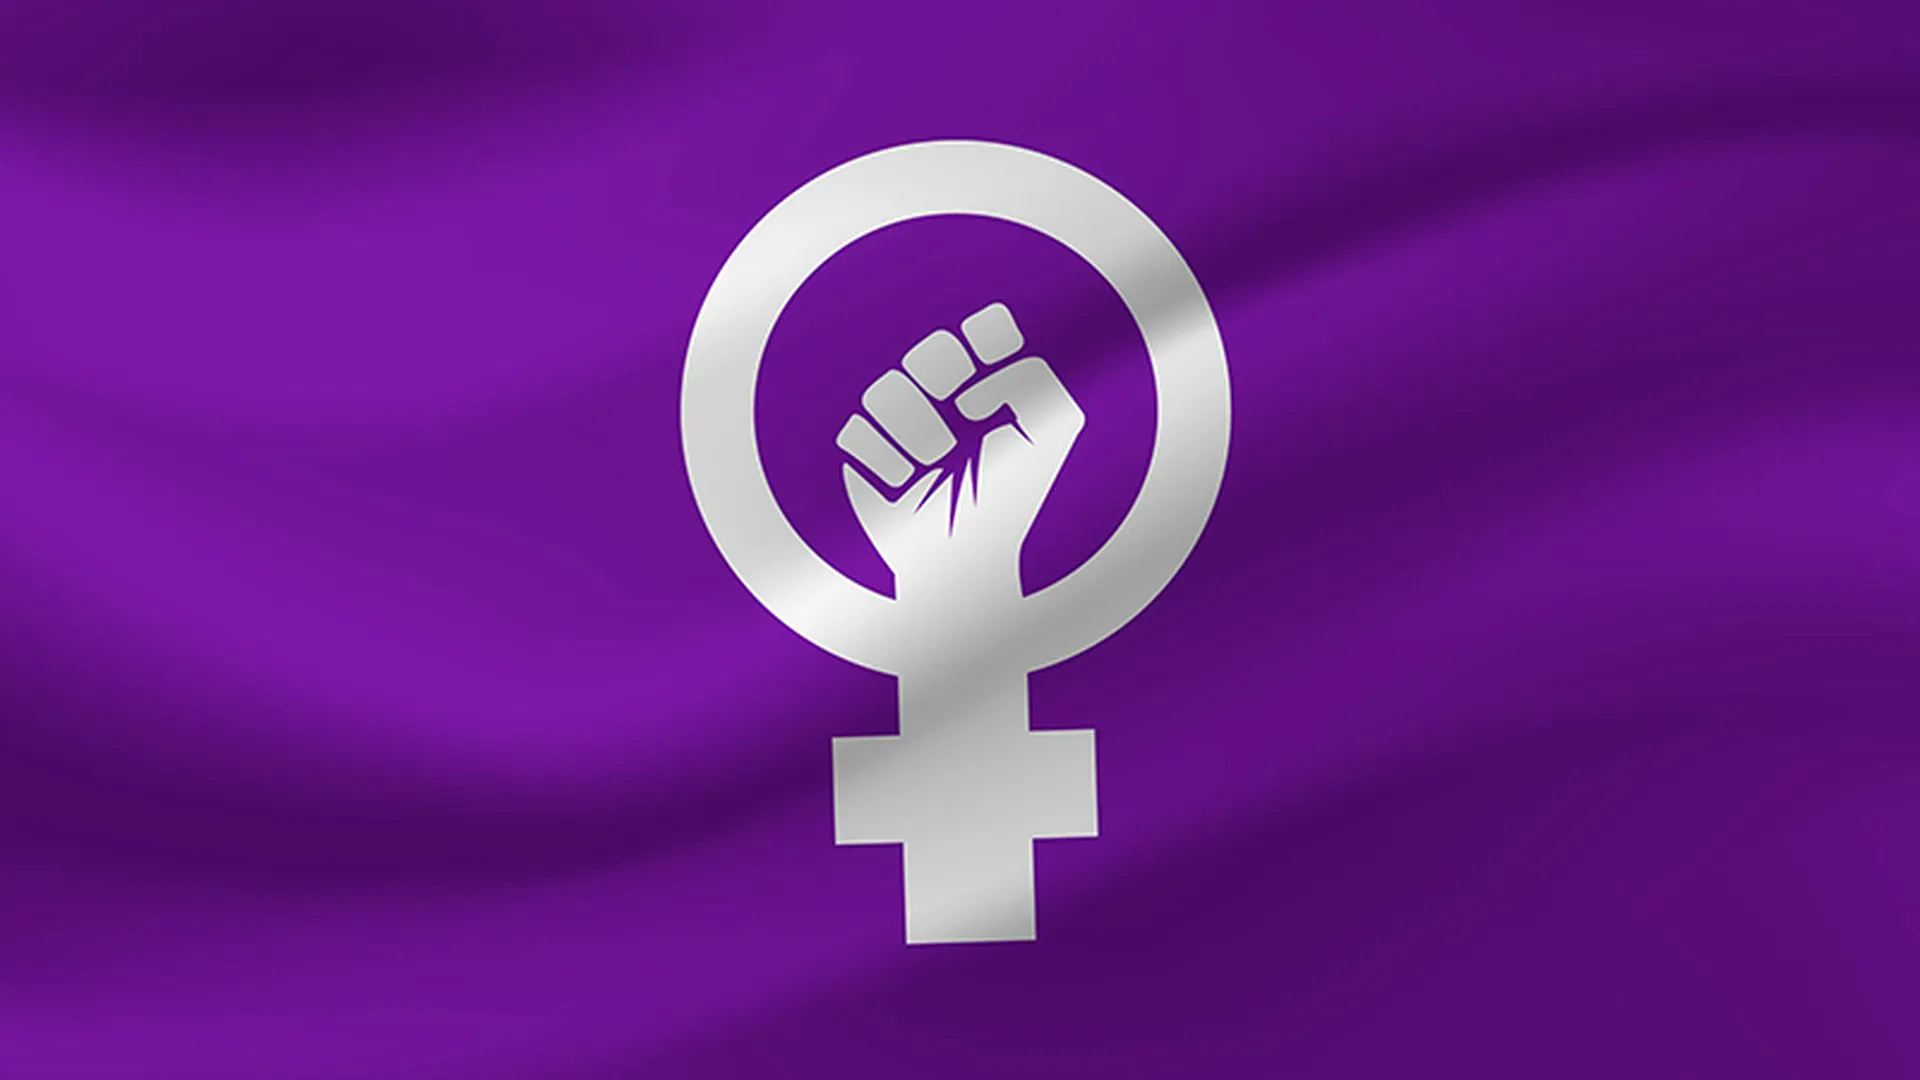 Флаг феминизма. Значок феминизма. Фото феминизм флаг. Флаг феминисток GWV.